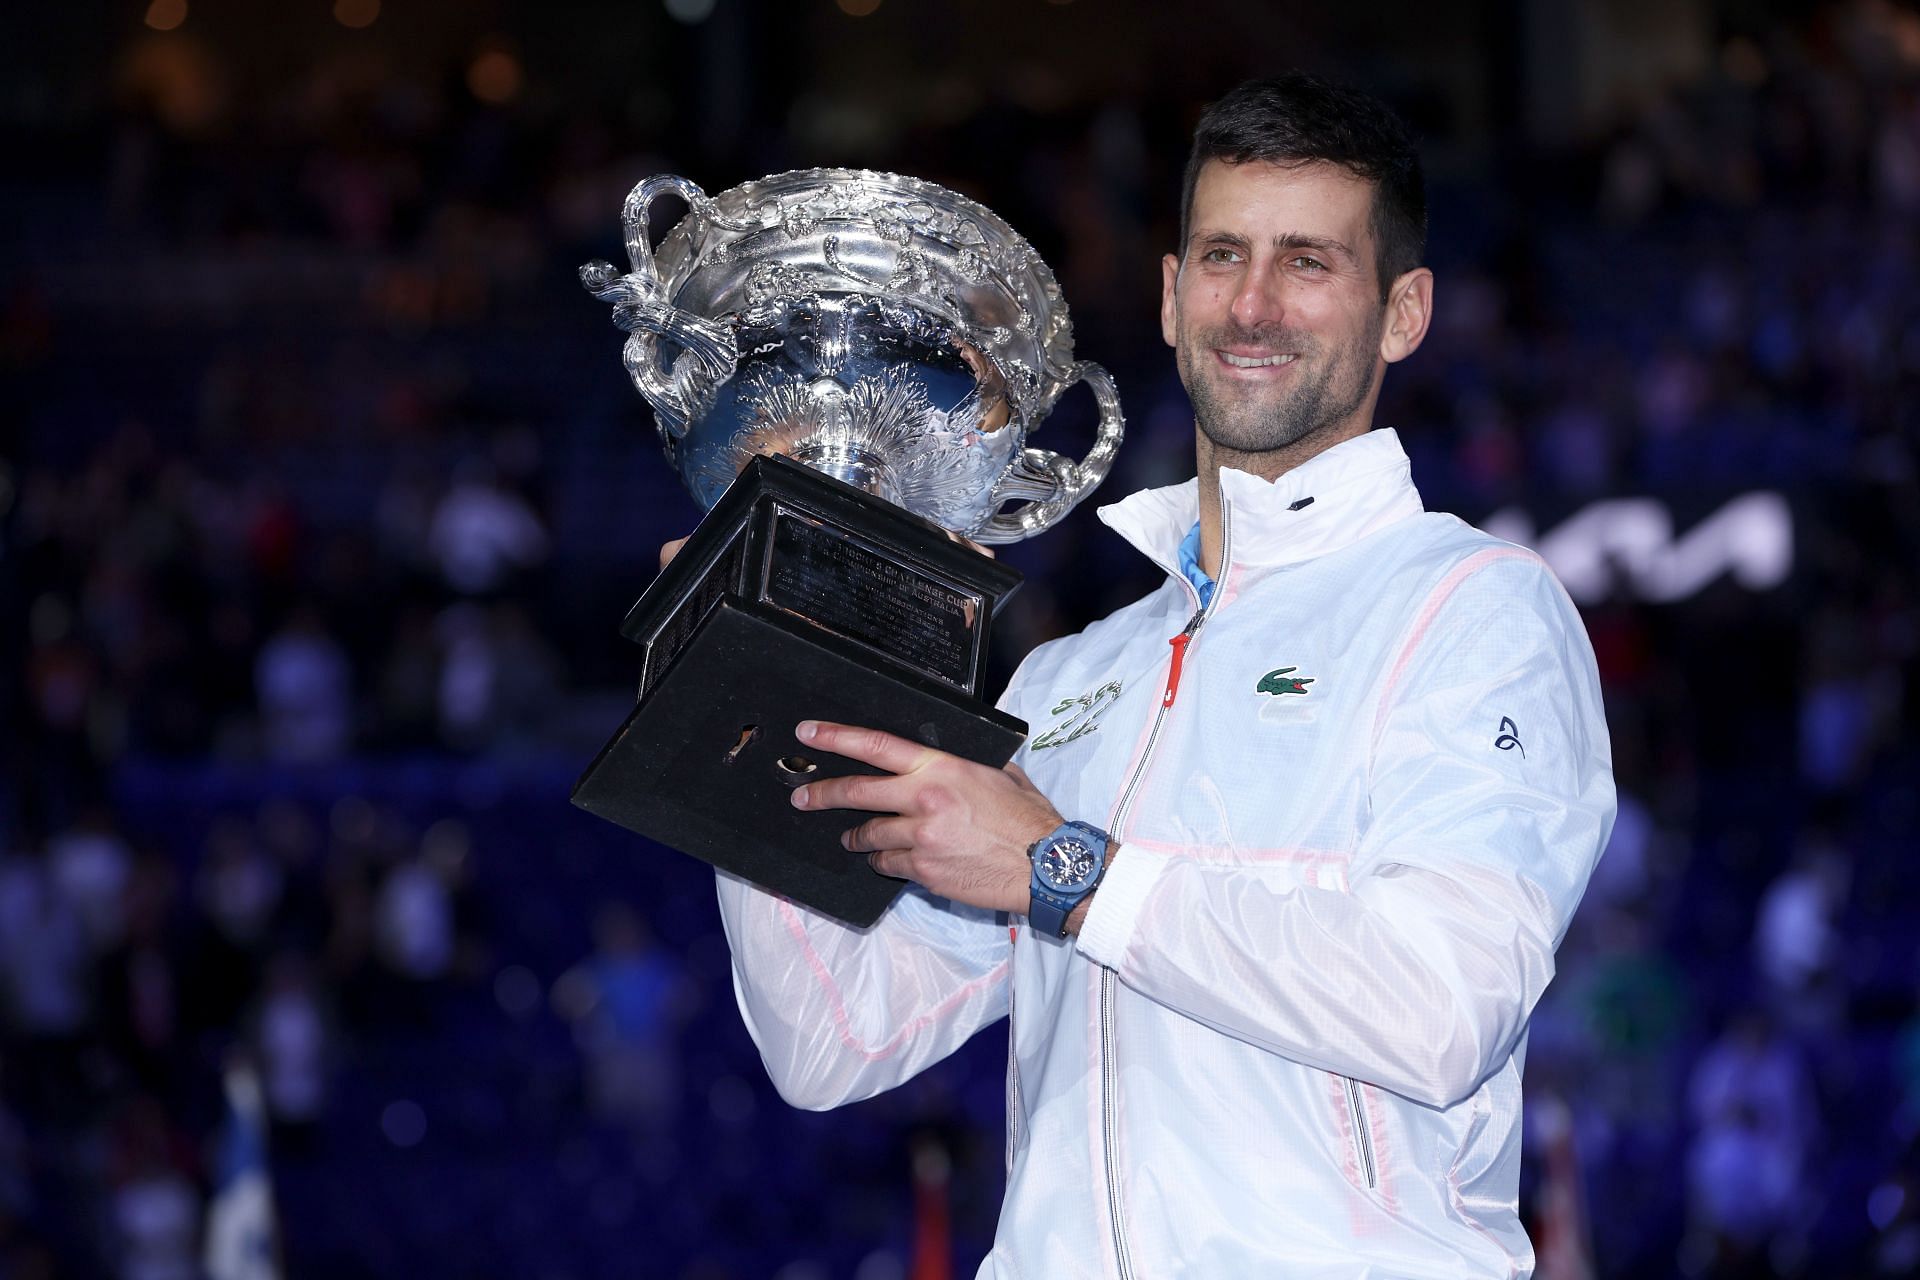 Novak Djokovic began 2023 by winning his 10th Australian Open title.